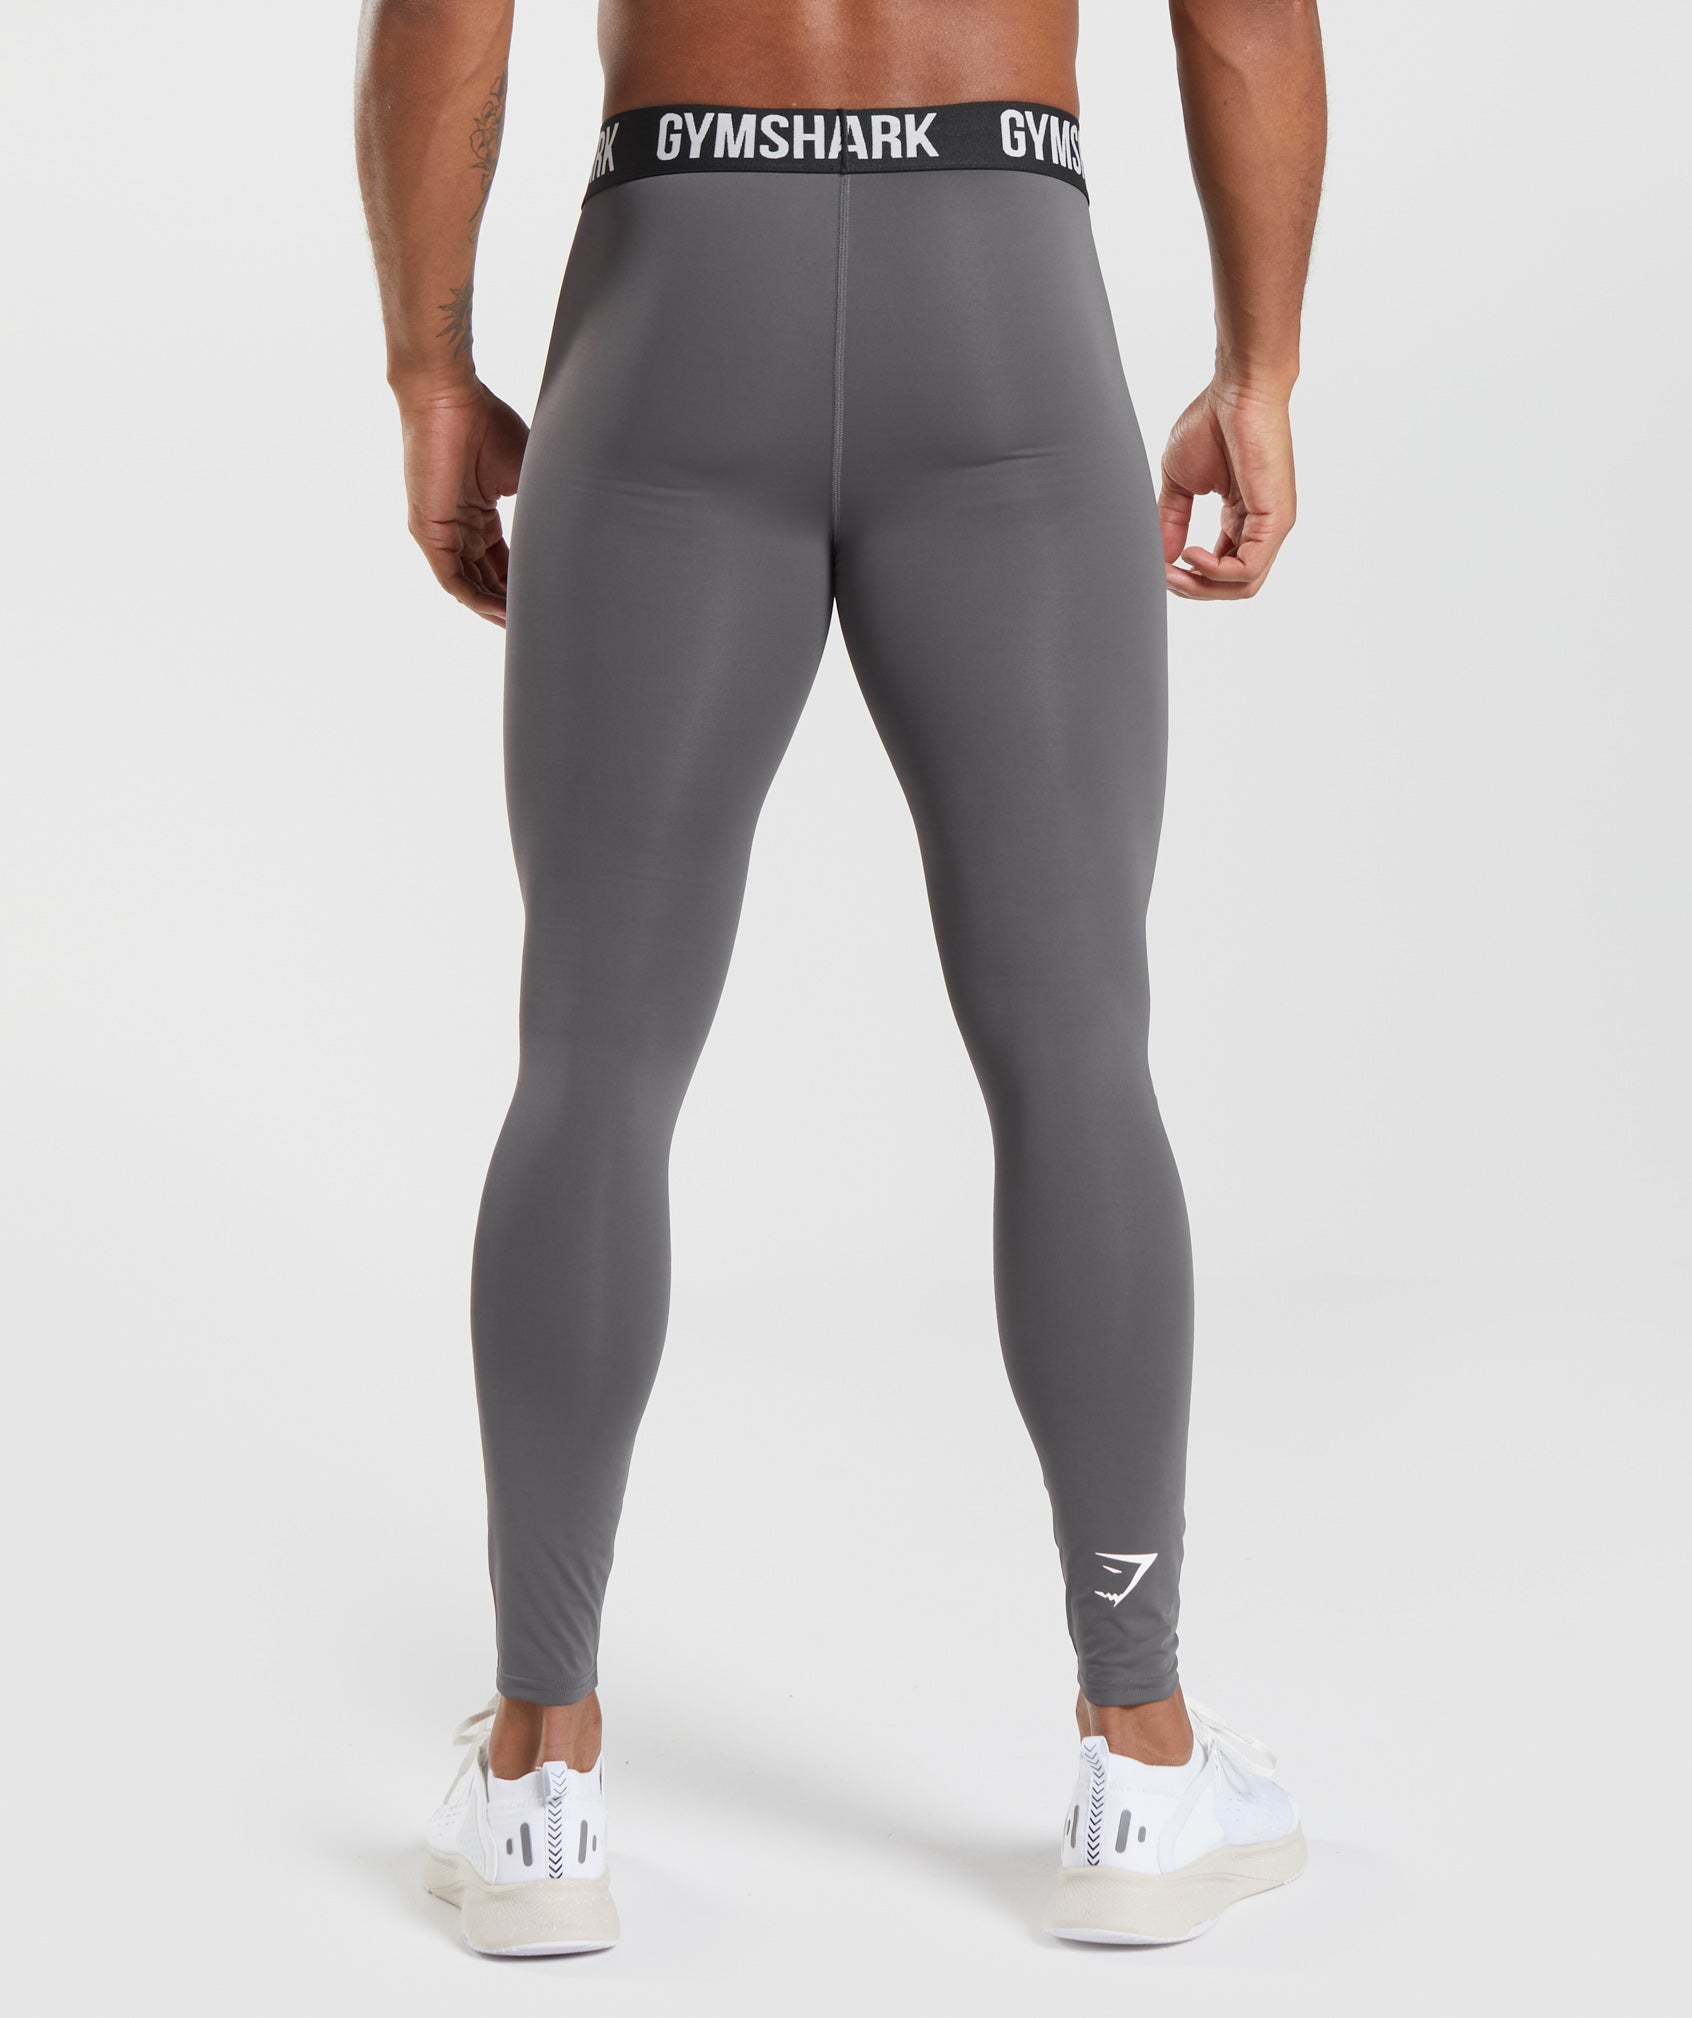 GYM SHARK S Women Leggings Dark Grey Patterned Stretch Logo Activewear